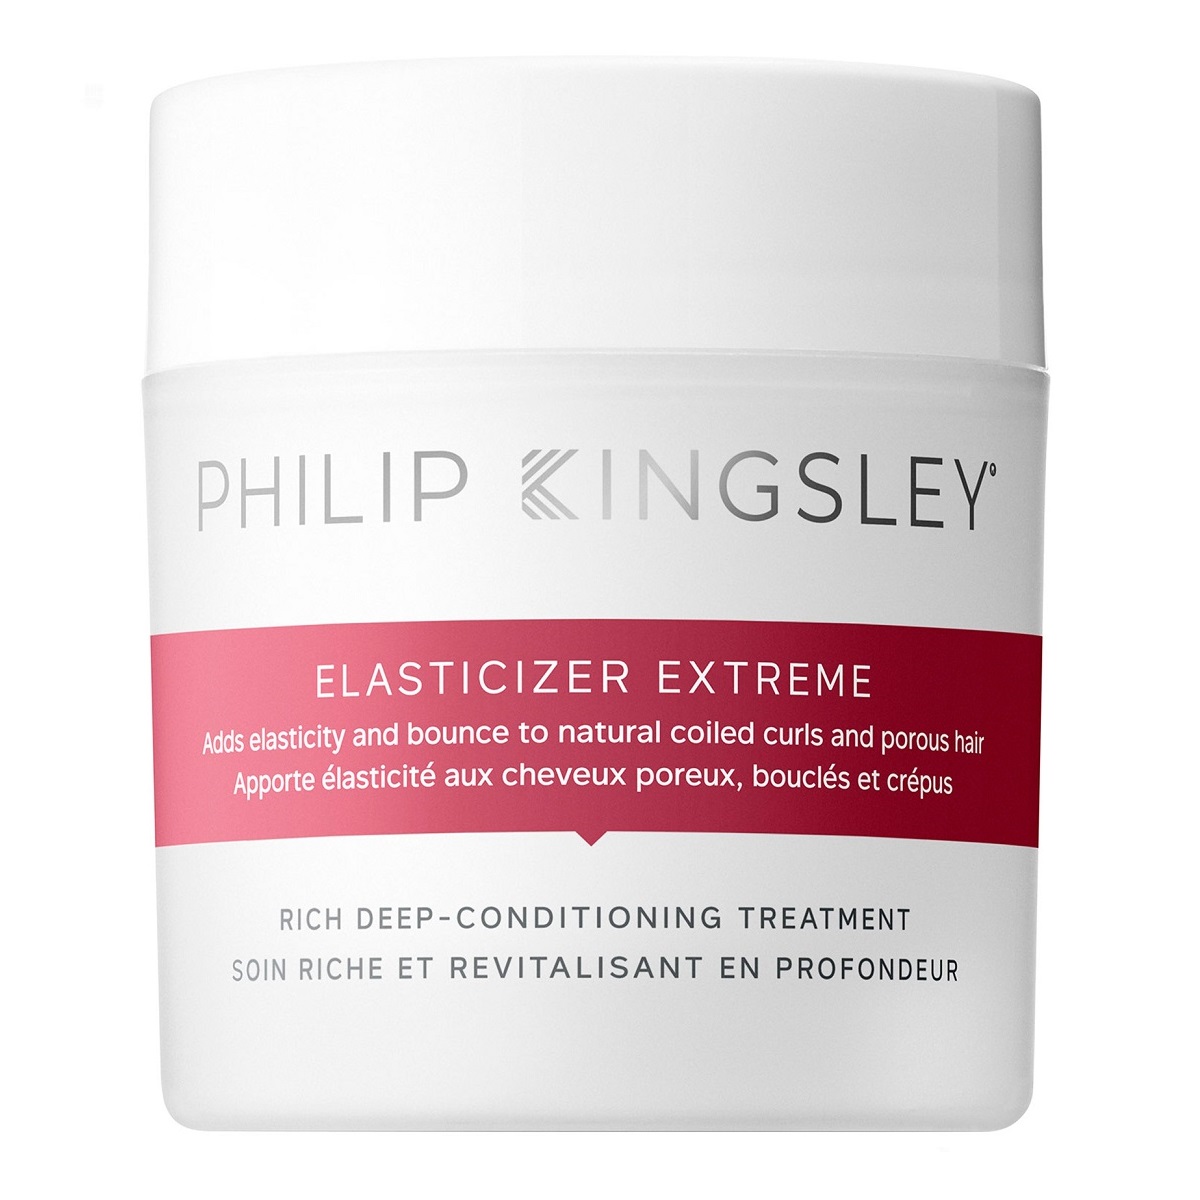 Philip Kingsley Суперувлажняющая маска для волос Extreme Rich Deep-Conditioning Treatment, 150 мл (Philip Kingsley, Elasticize)